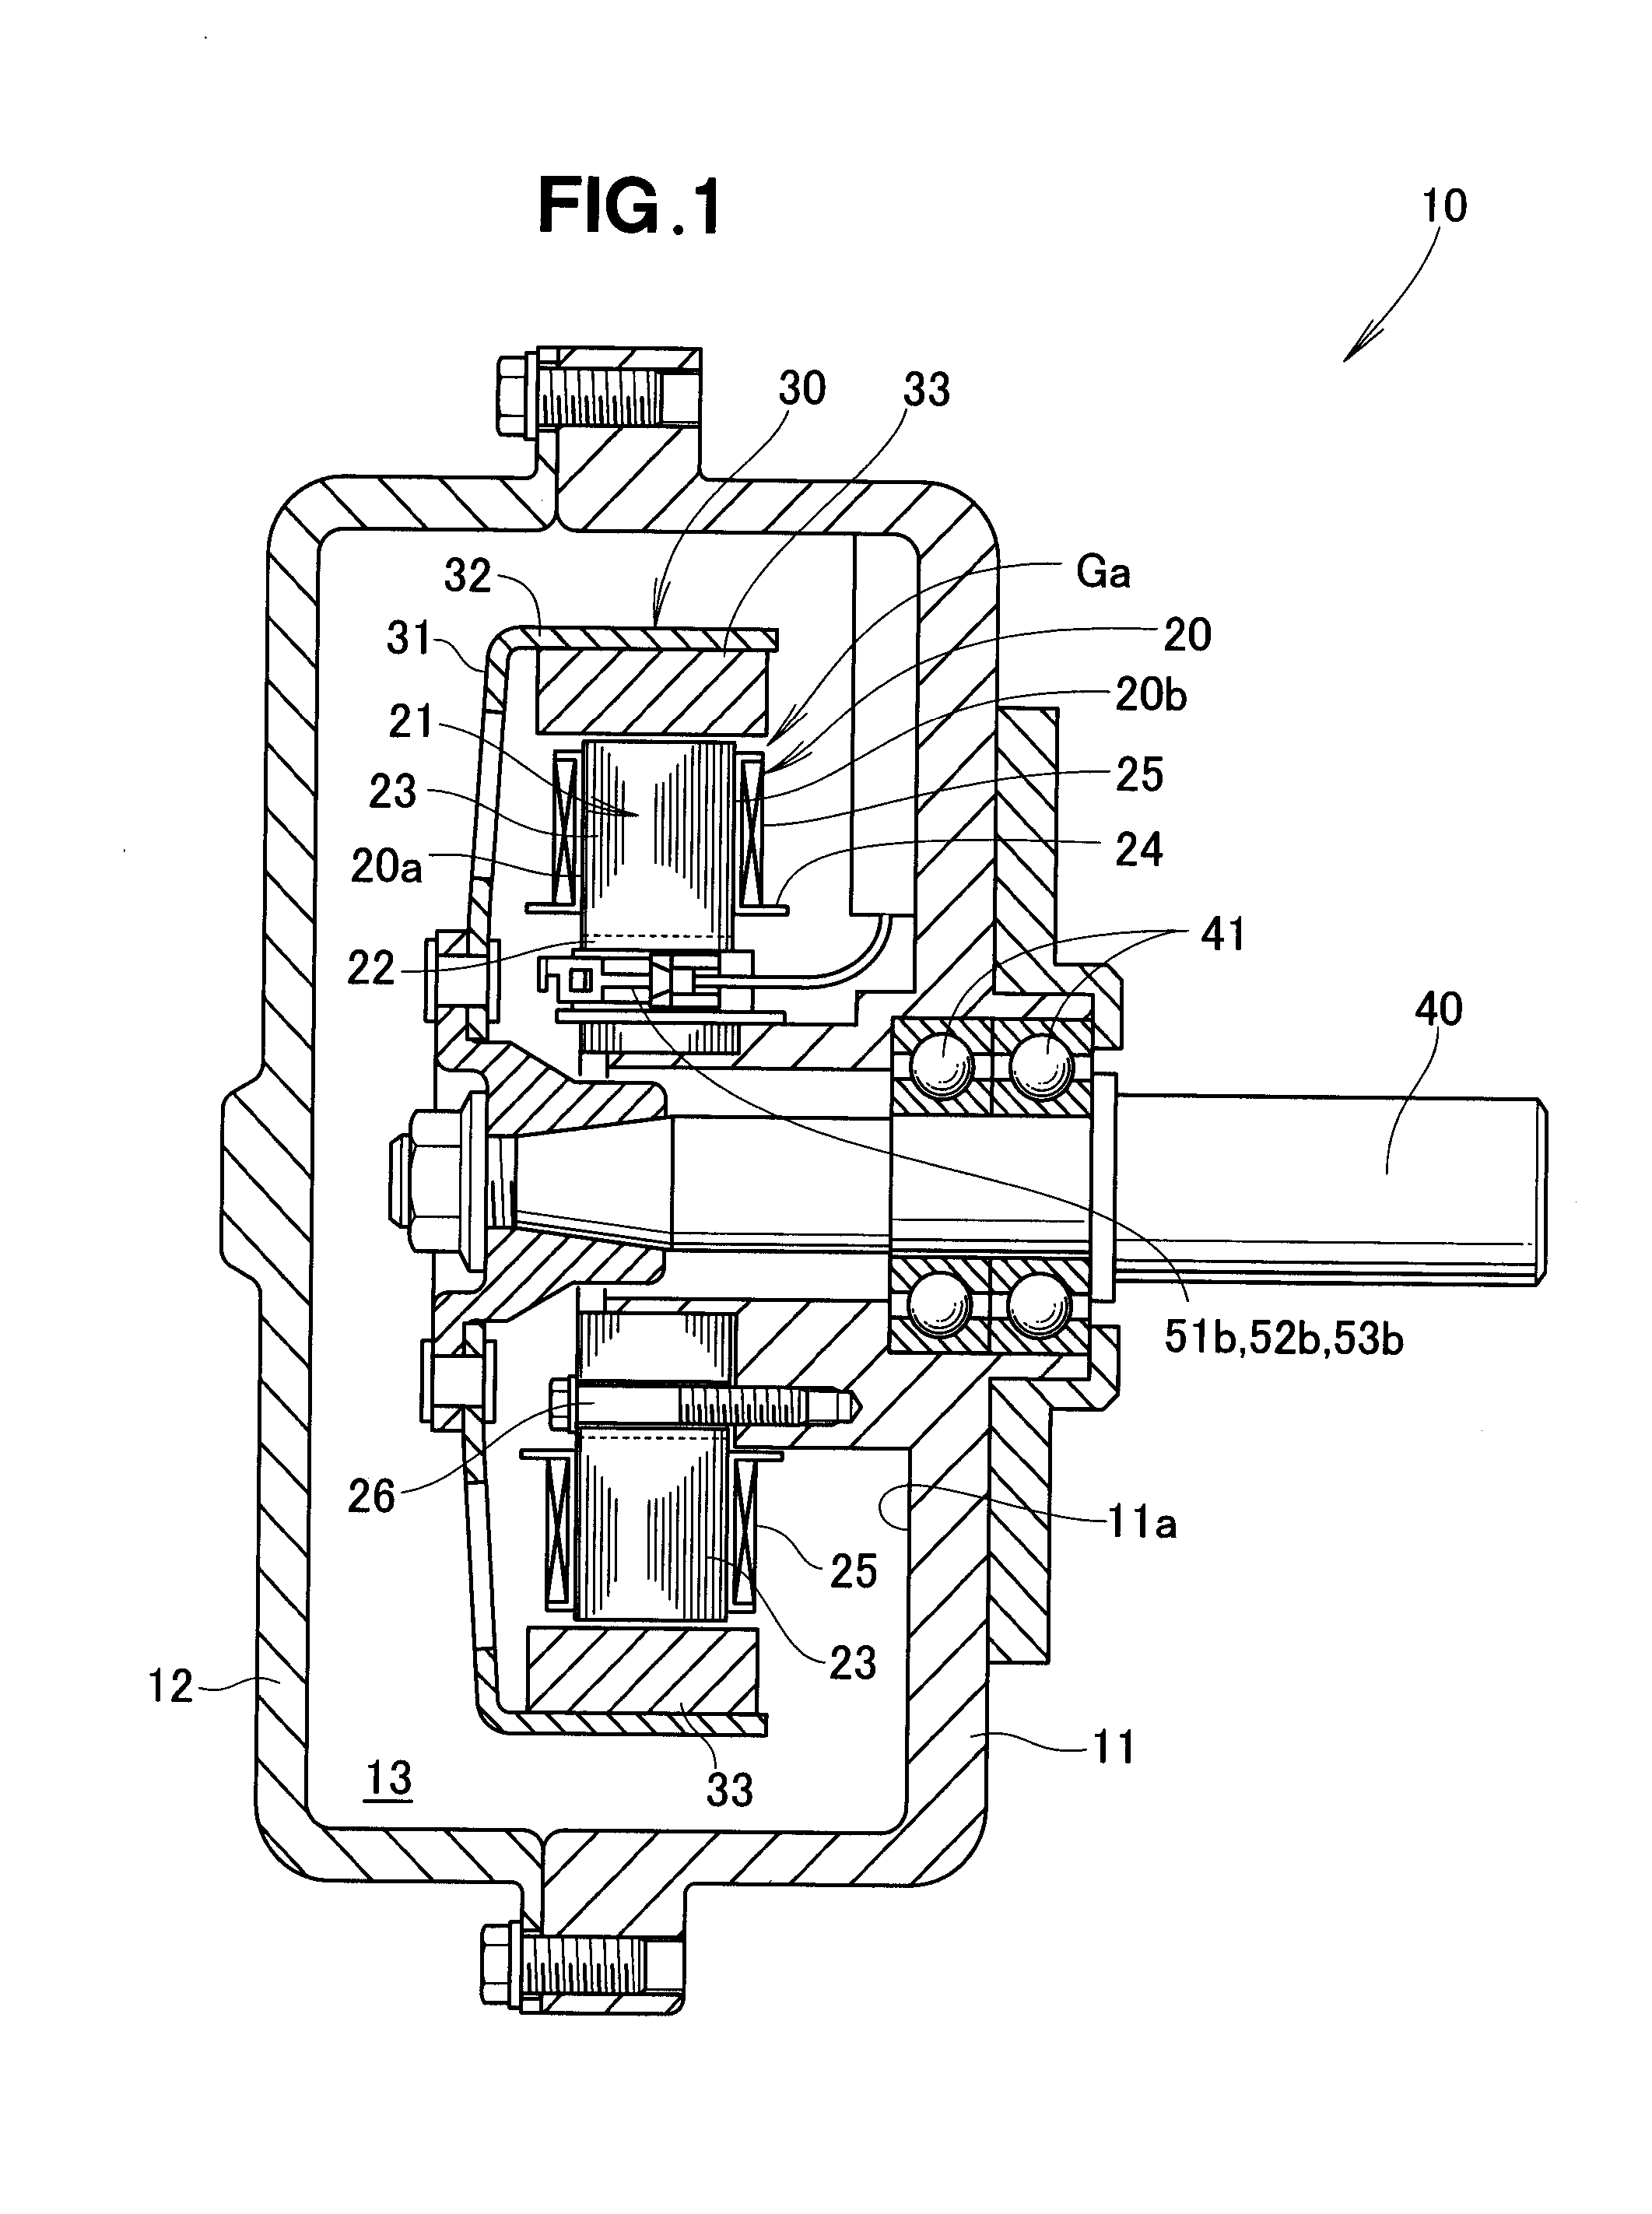 Multi-pole, three-phase rotary electric machine